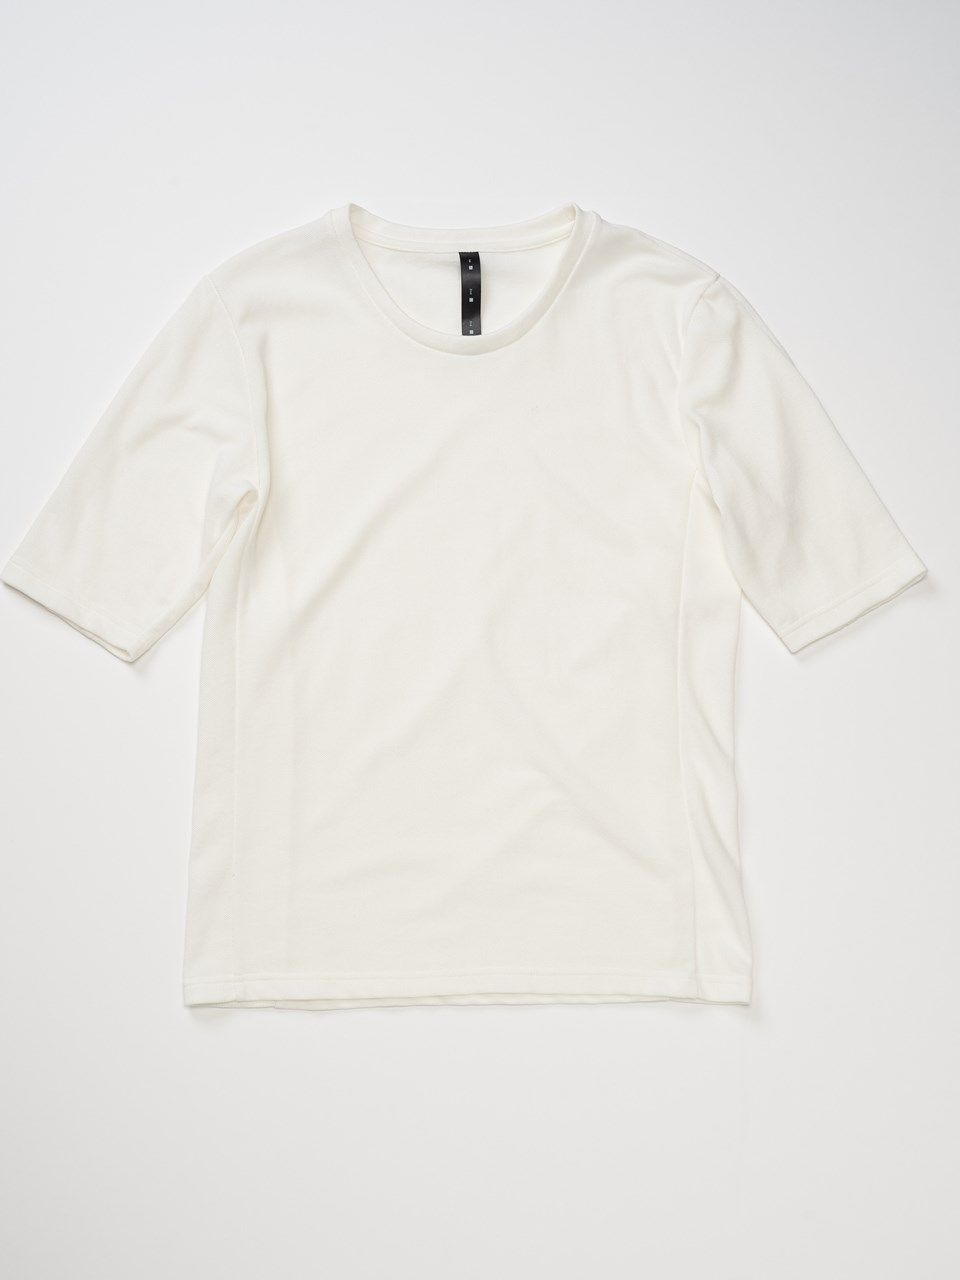 wjk - 《予約品》 half sleeve KANOKO cut&sewn / Tシャツ / ホワイト